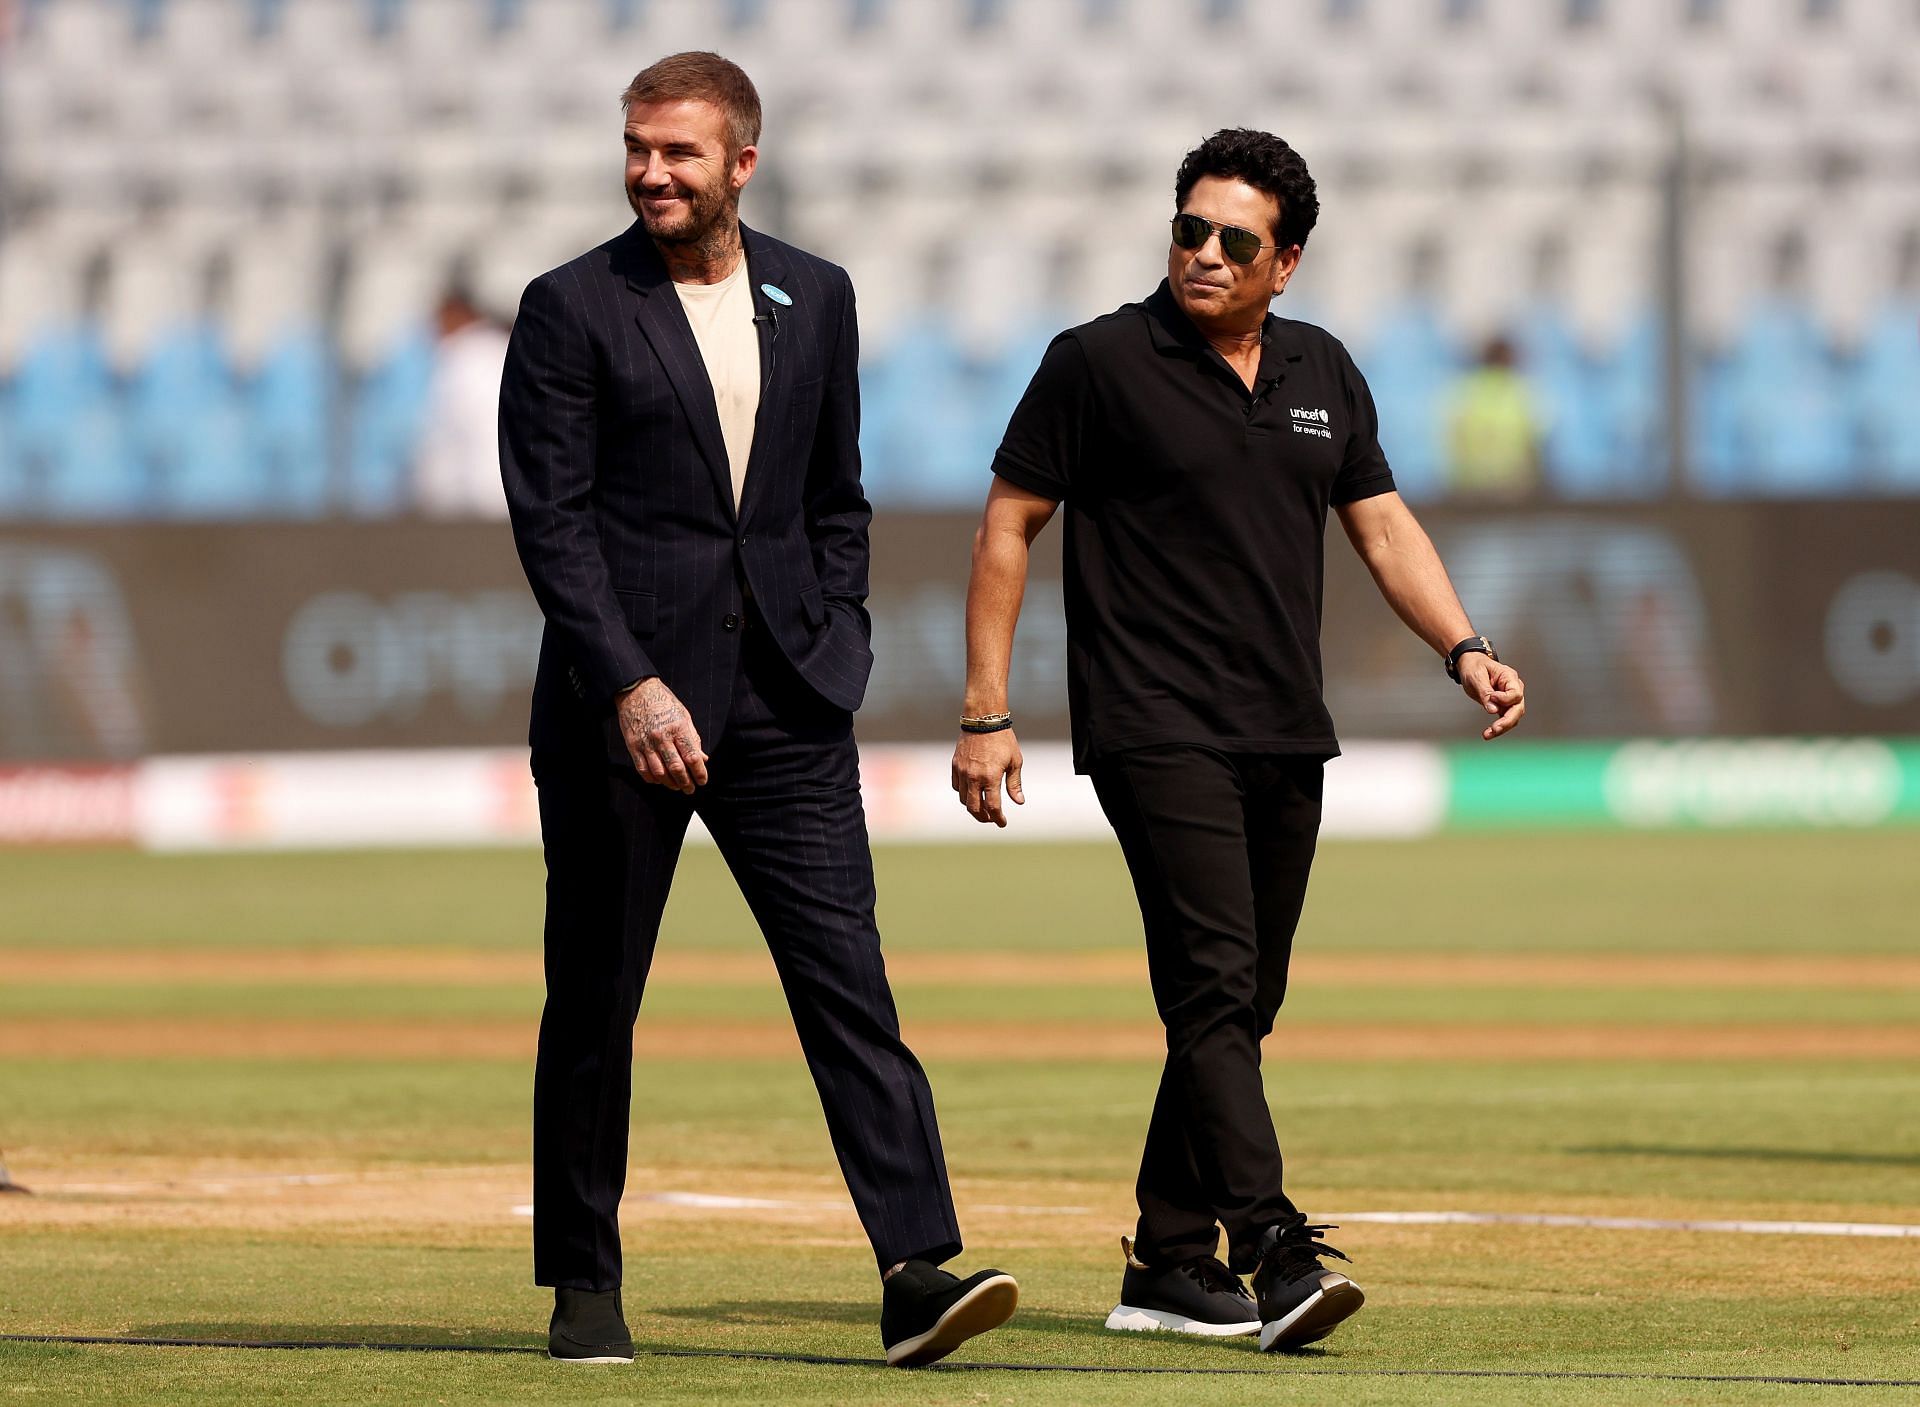 David Beckham and Sachin Tendulkar (via Getty Images)